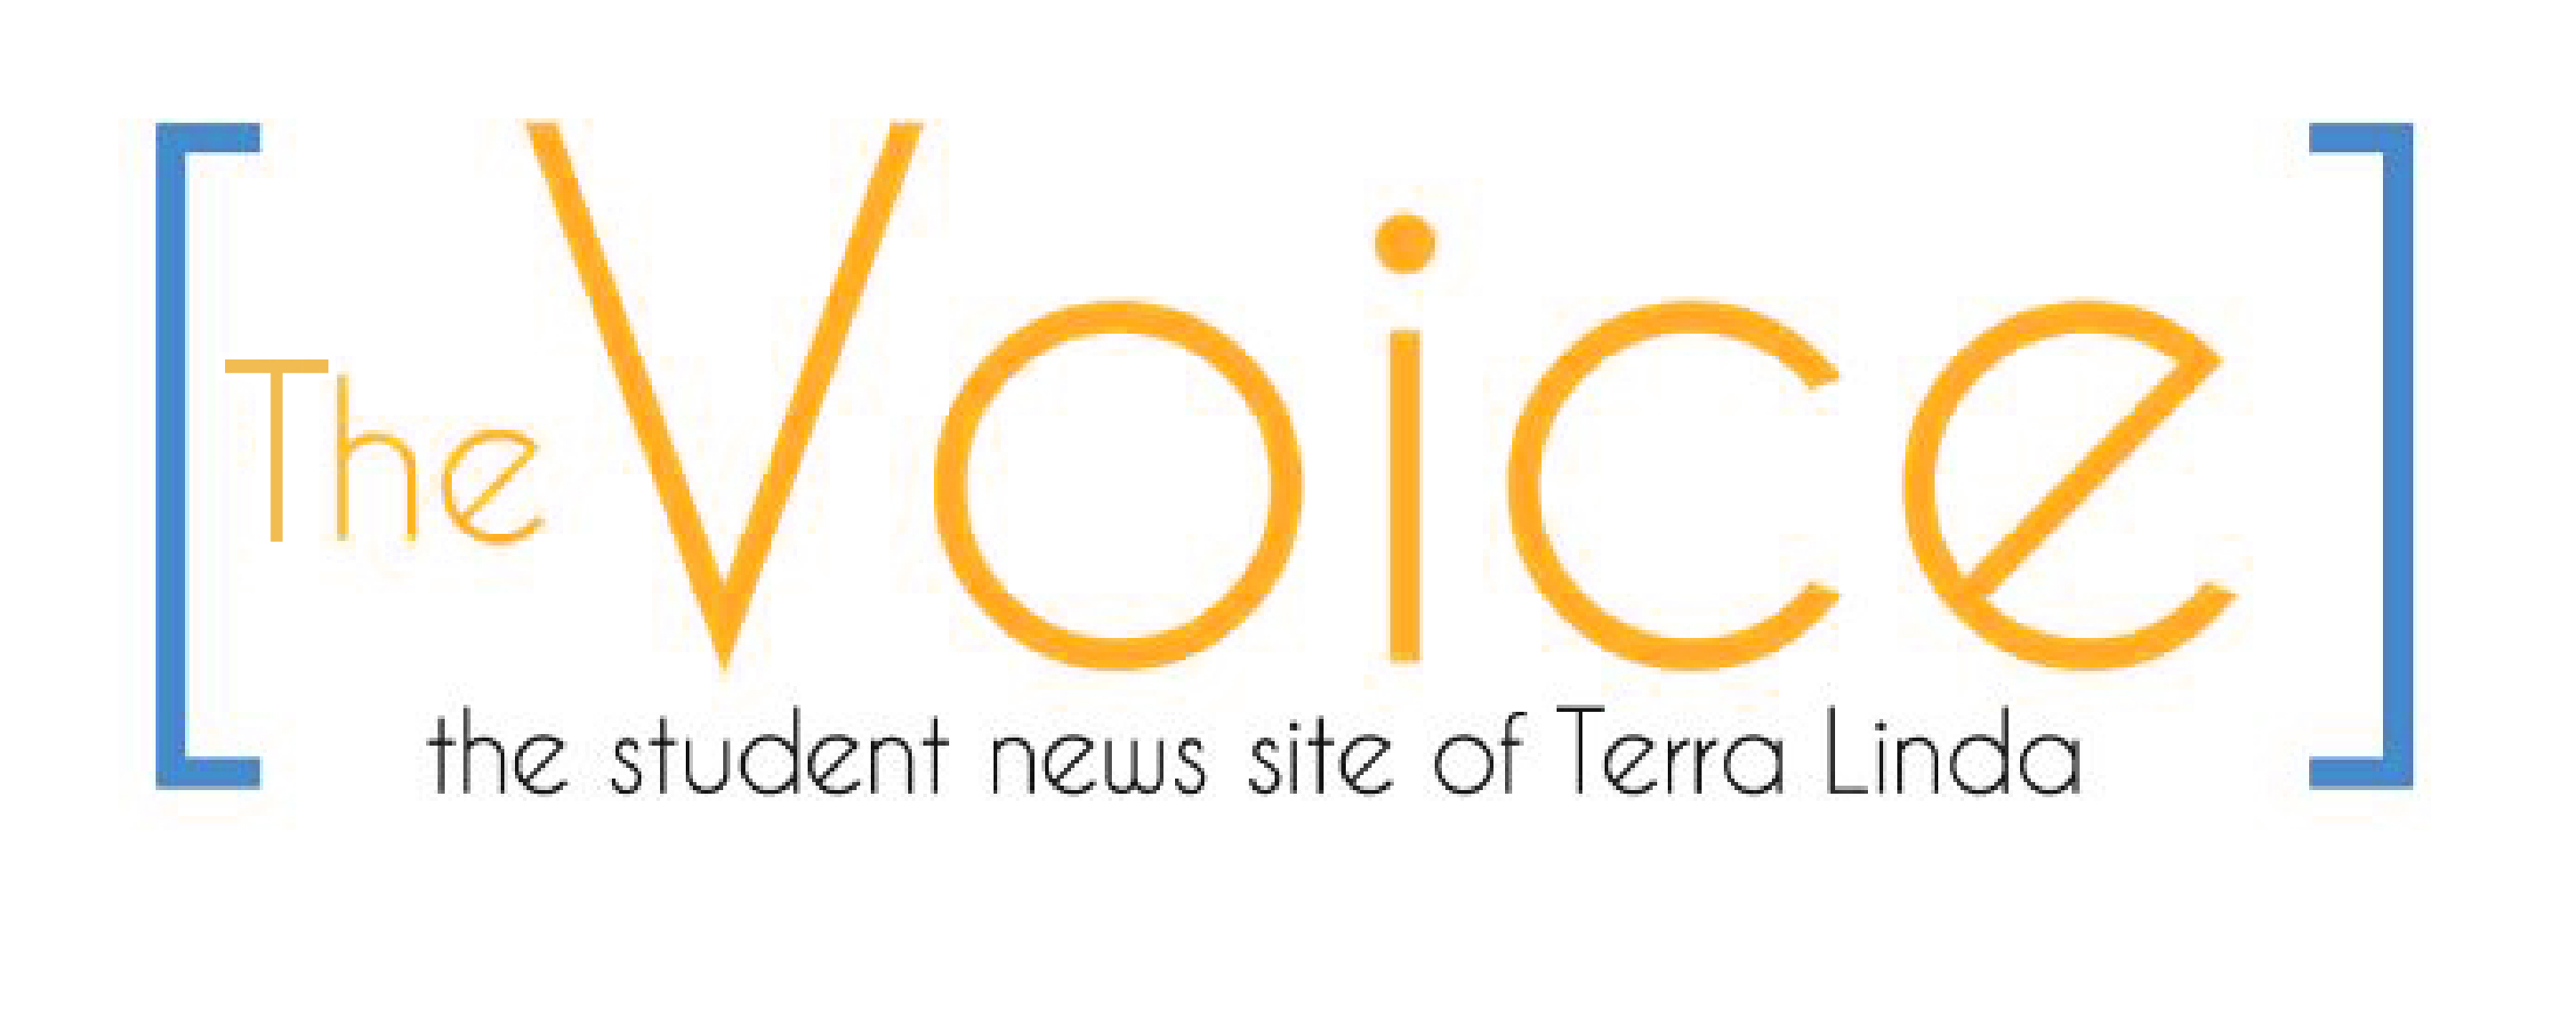 The student news site of Terra Linda High School.